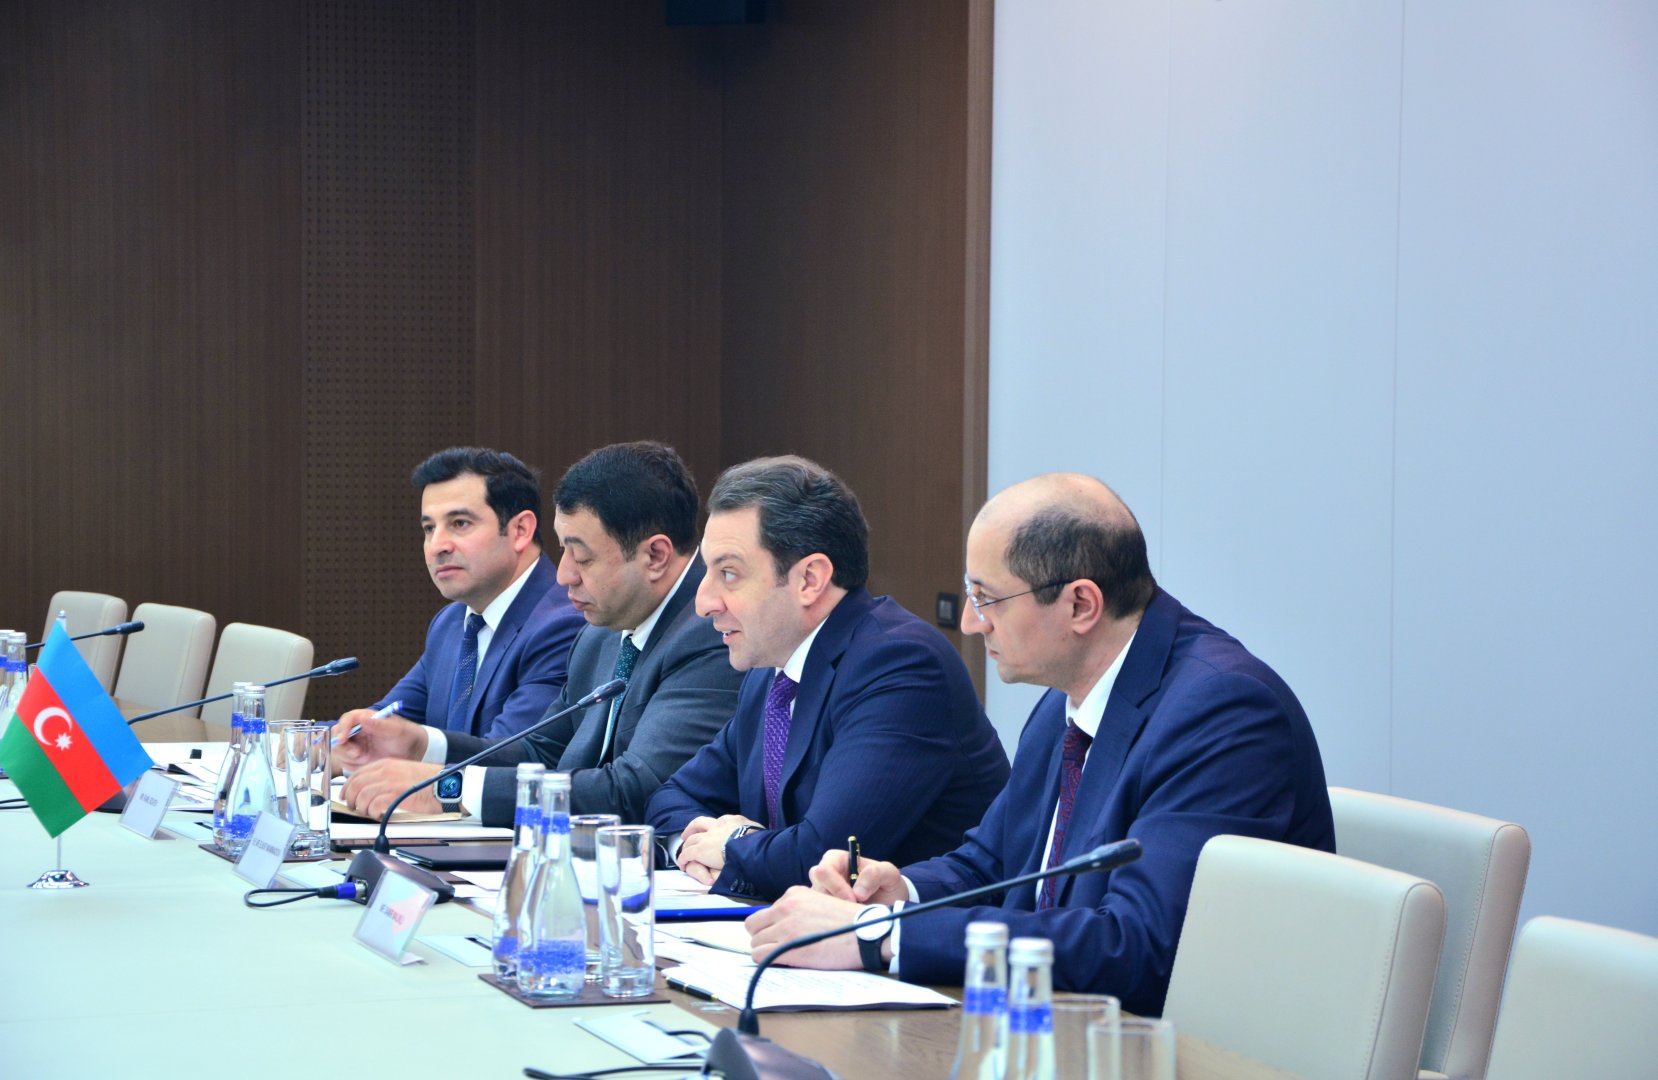 Azerbaijan and Australia hold first political consultation meeting (PHOTO)